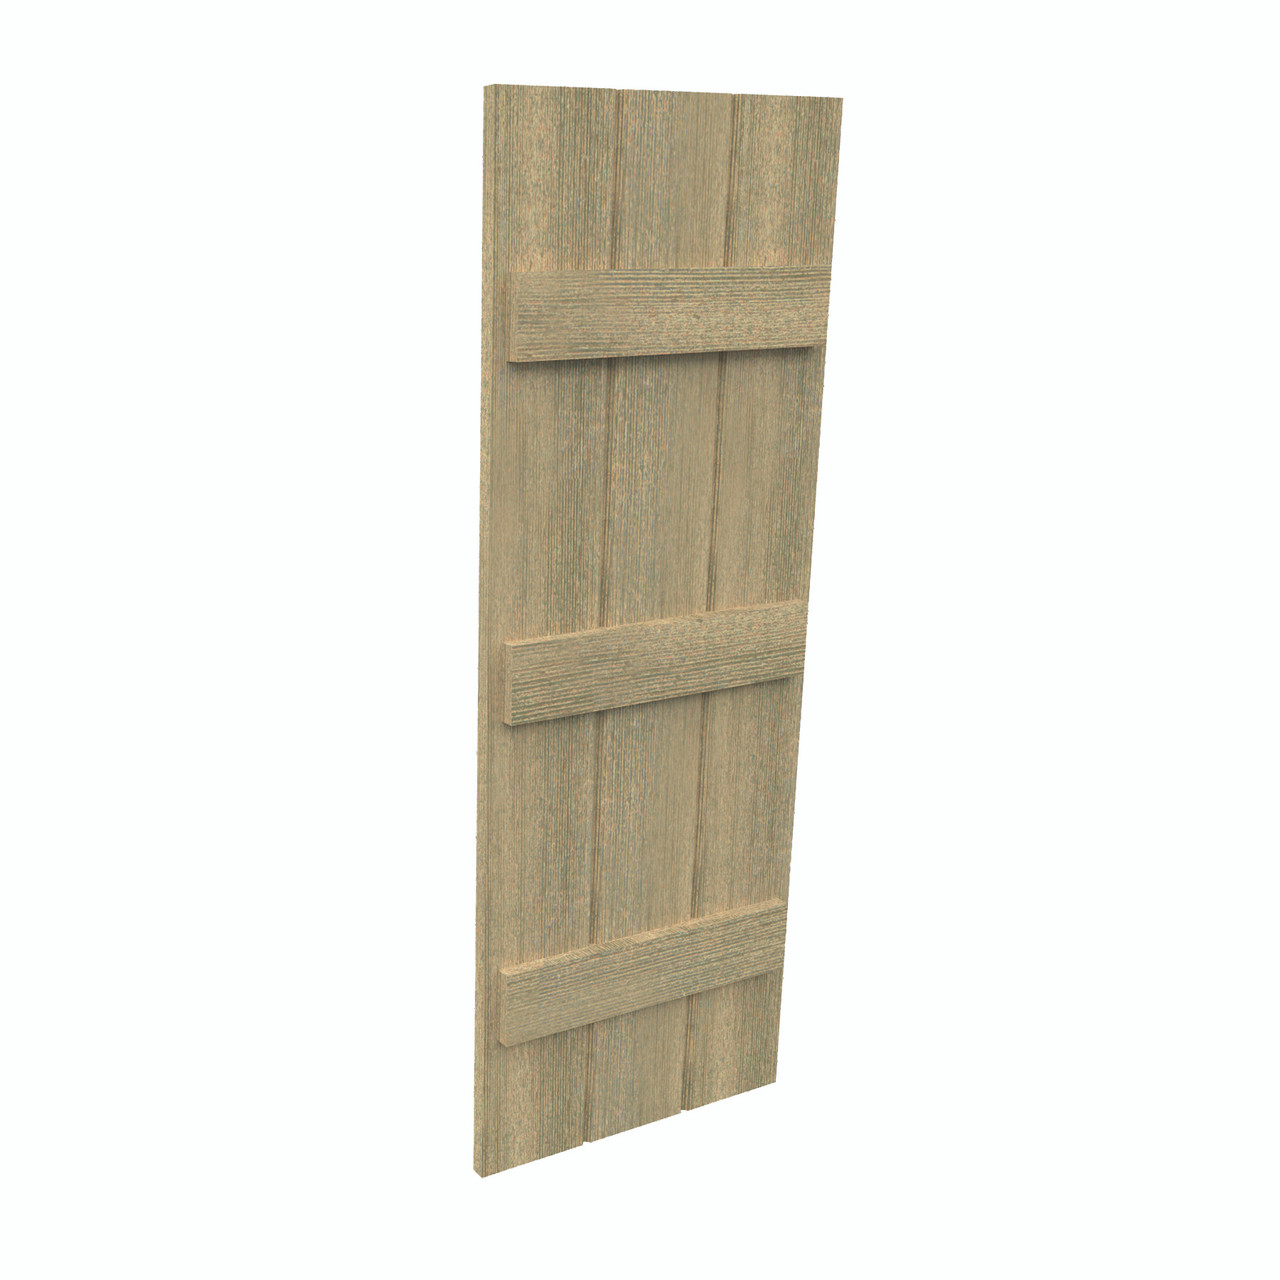 18 inch by 59 inch Plank Shutter with 3-Plank, 3-Batten